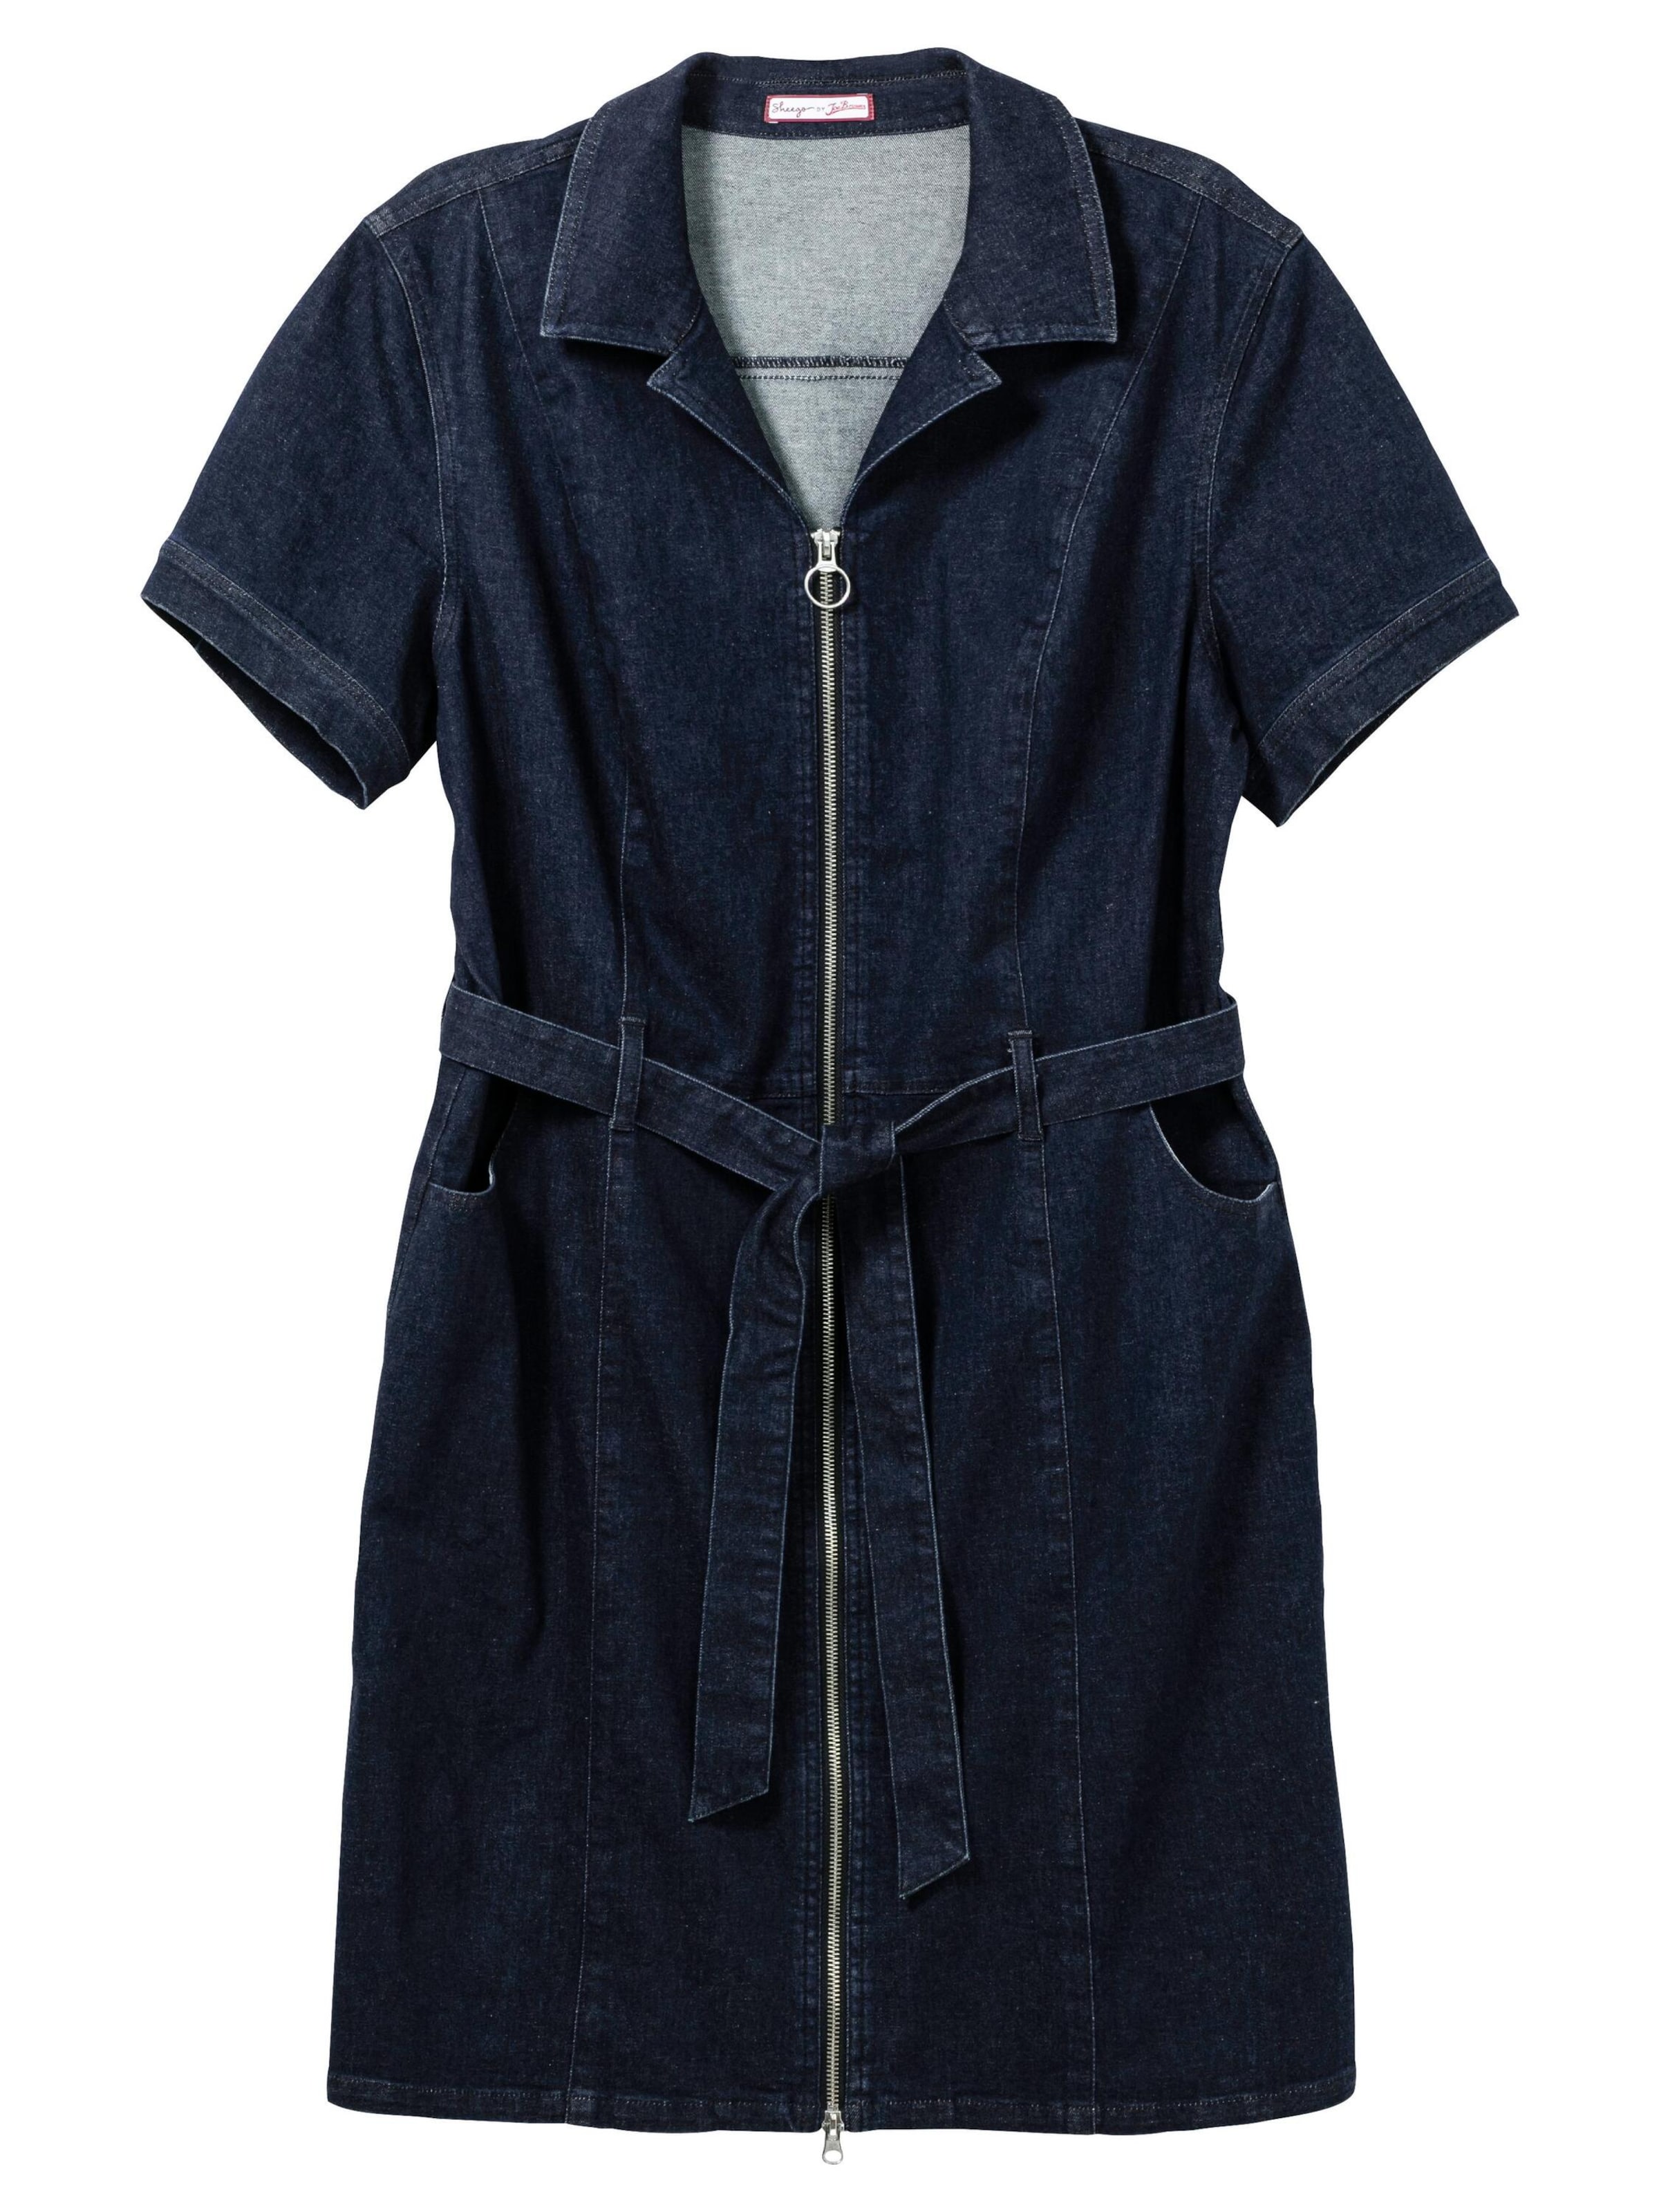 Joe Browns Size 16 Denim Shirt Dress Round-Neck Short Sleeved with Pockets  | eBay